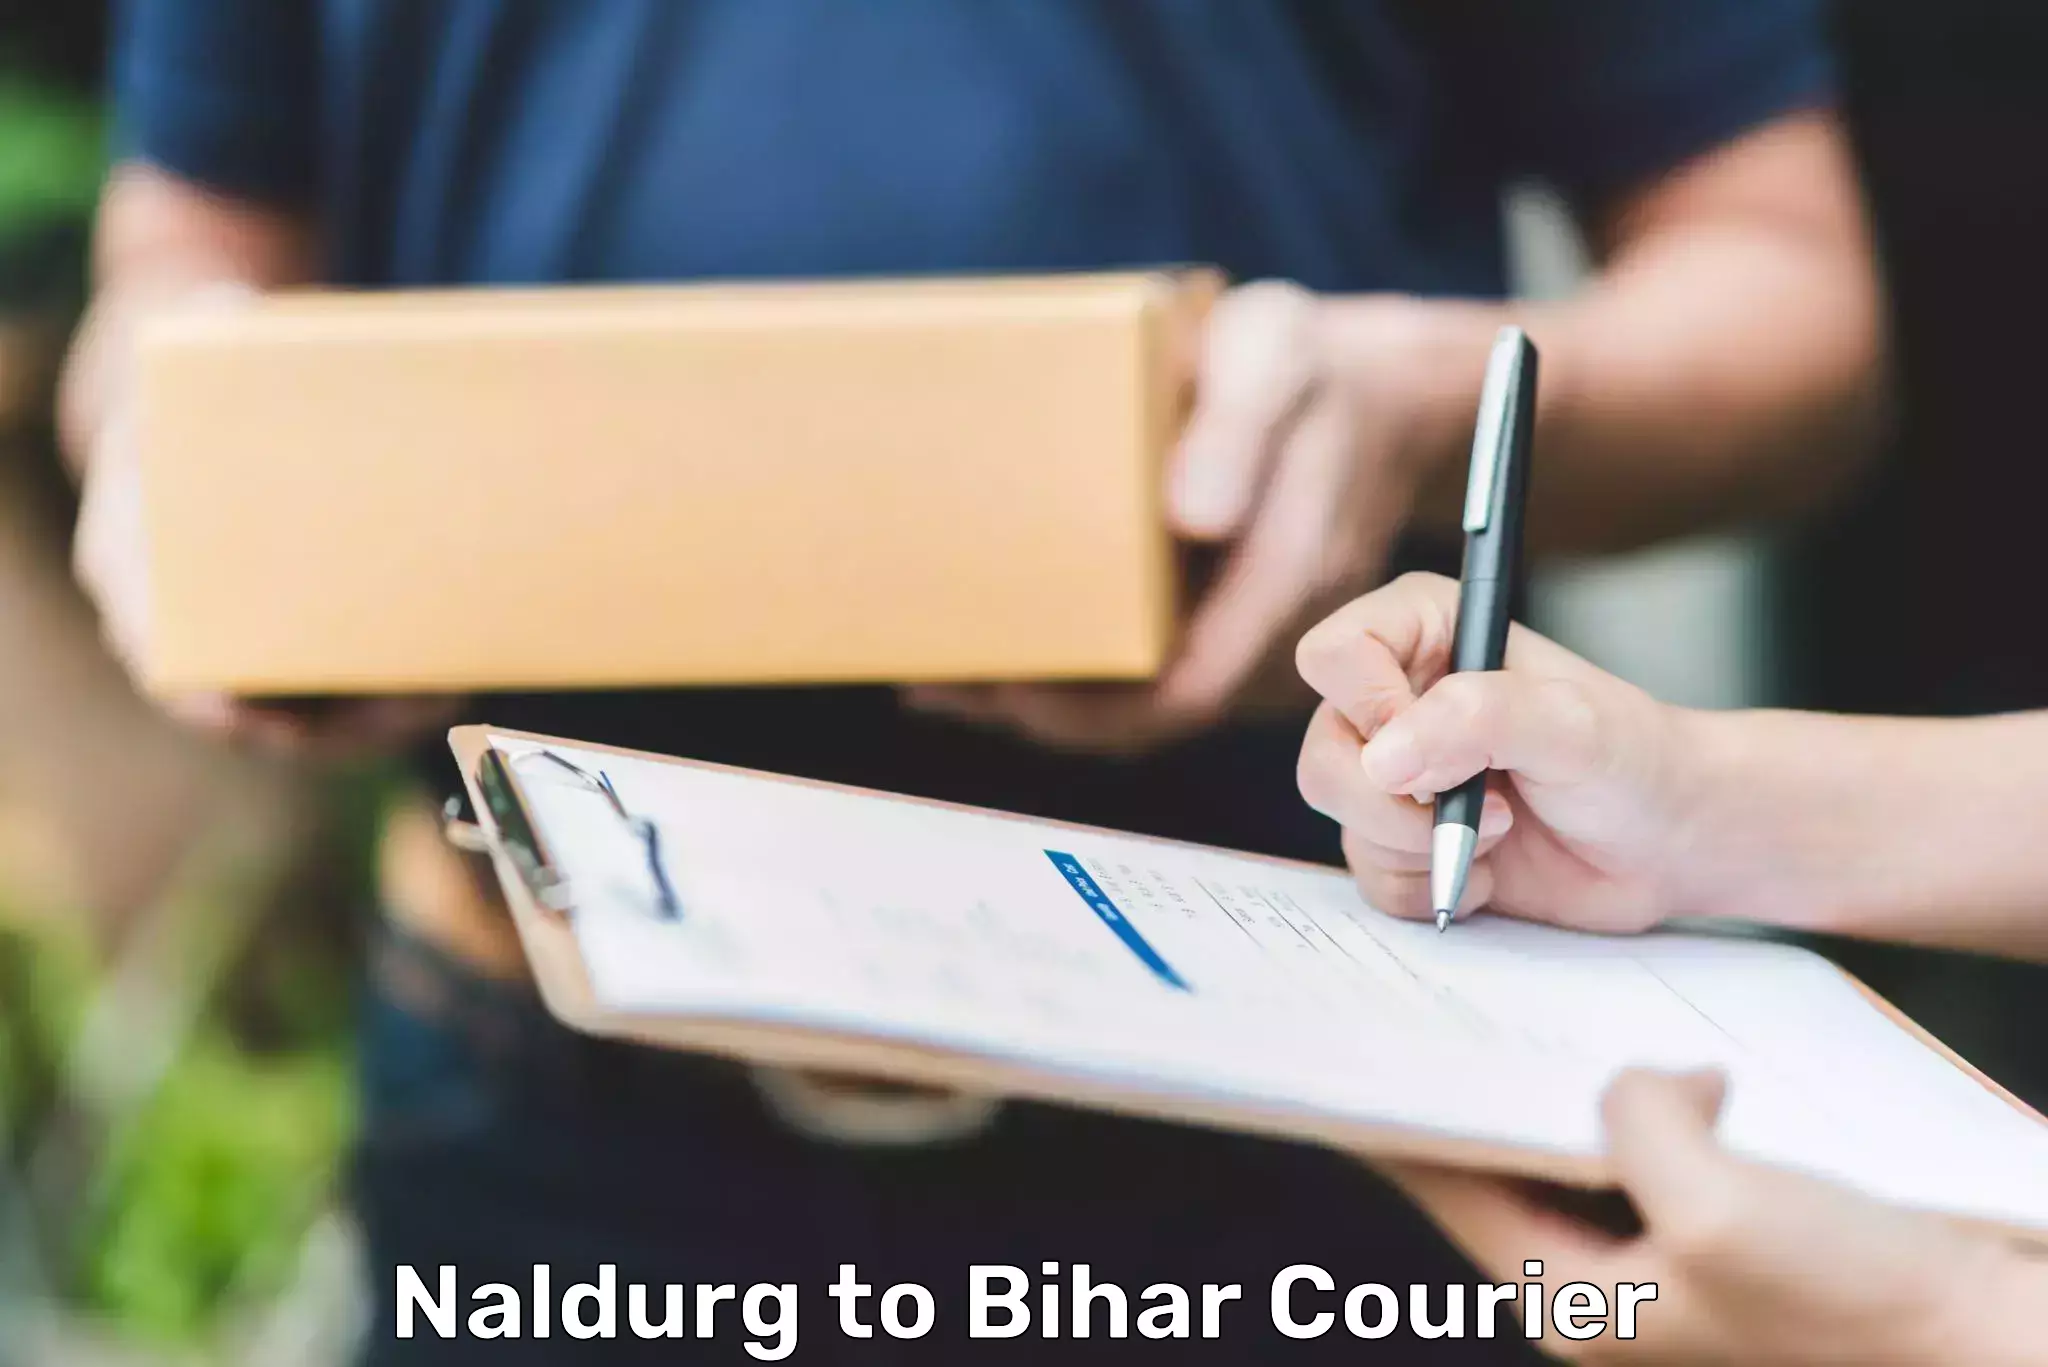 Courier service innovation Naldurg to Biraul